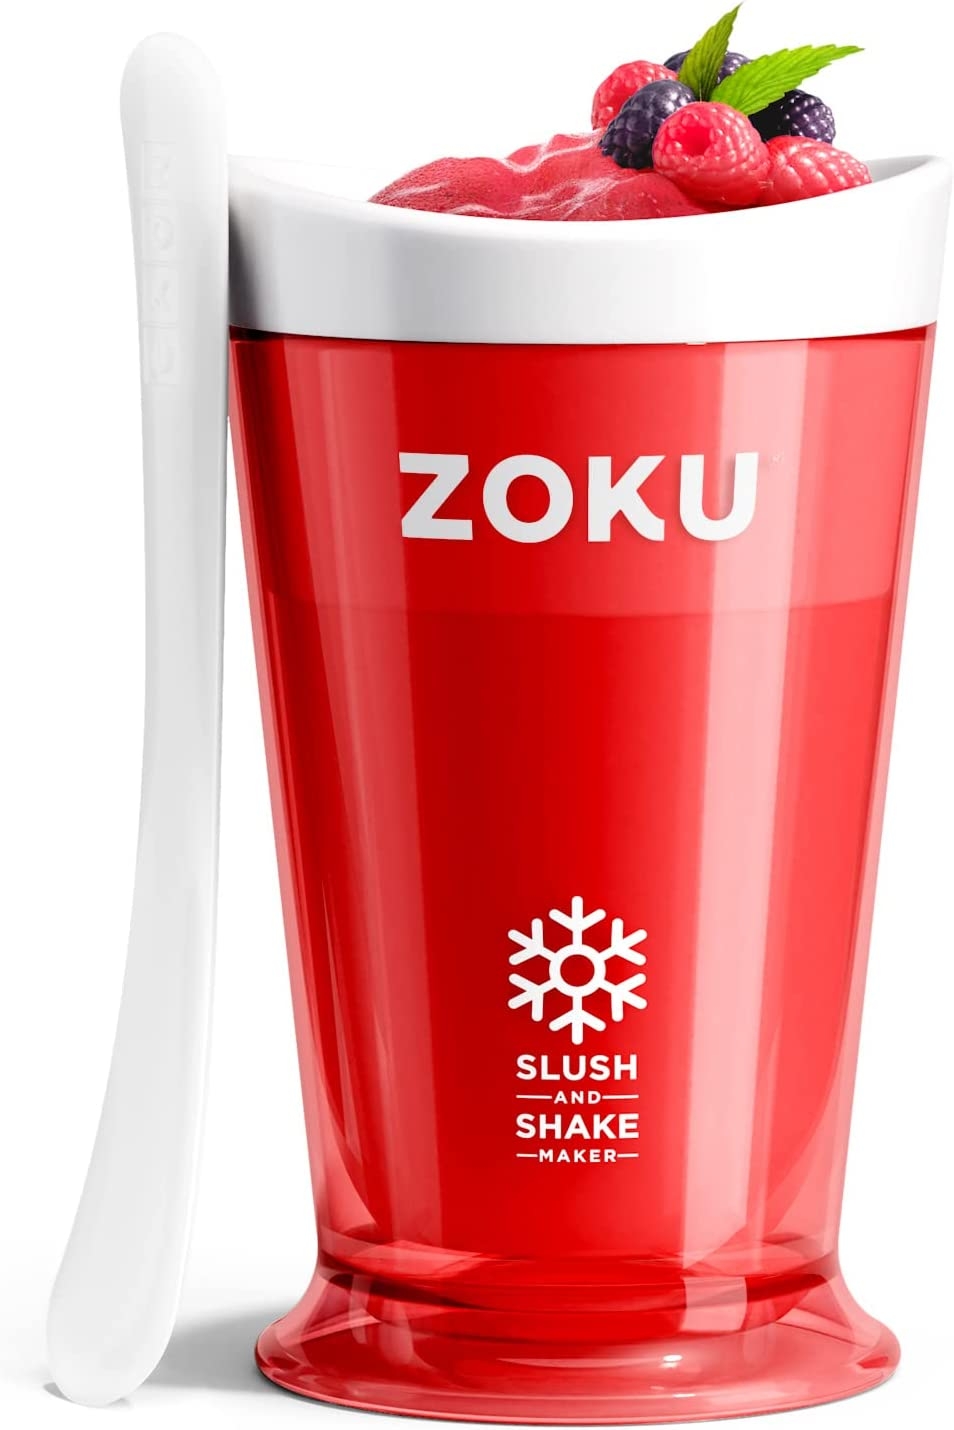 ZOKU Original Slush and Shake Maker, Compact Make and Serve Cup with Freezer Core Creates Single-Serving Smoothies, Slushies and